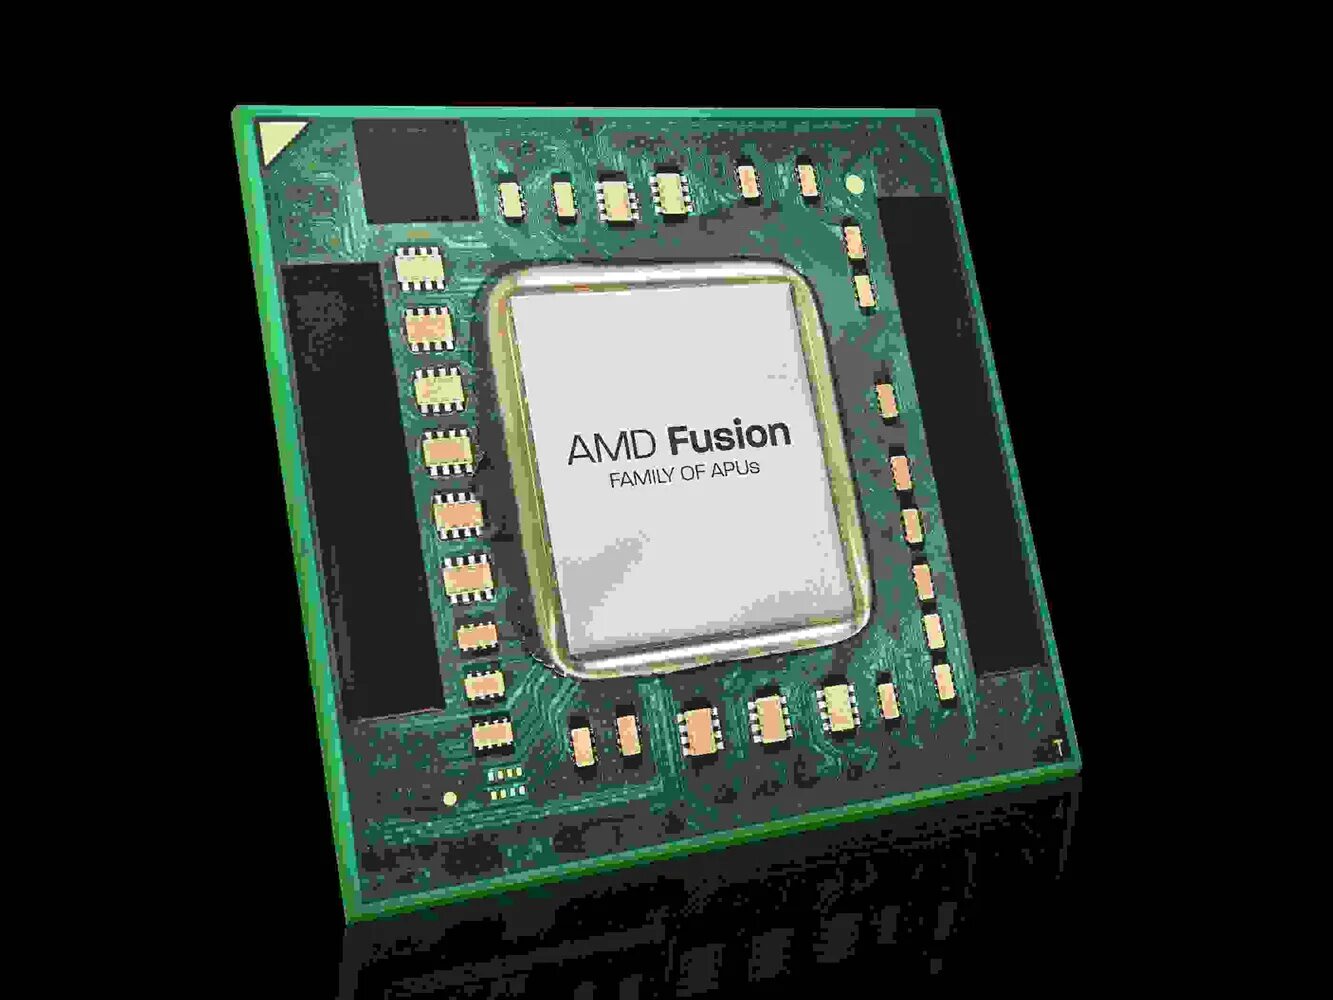 A6 3600. AMD a8-4500m APU. Процессор AMD a8-4500m для ноутбука. AMD a8-7410 APU. Сокет процессора AMD a6-7310 APU.